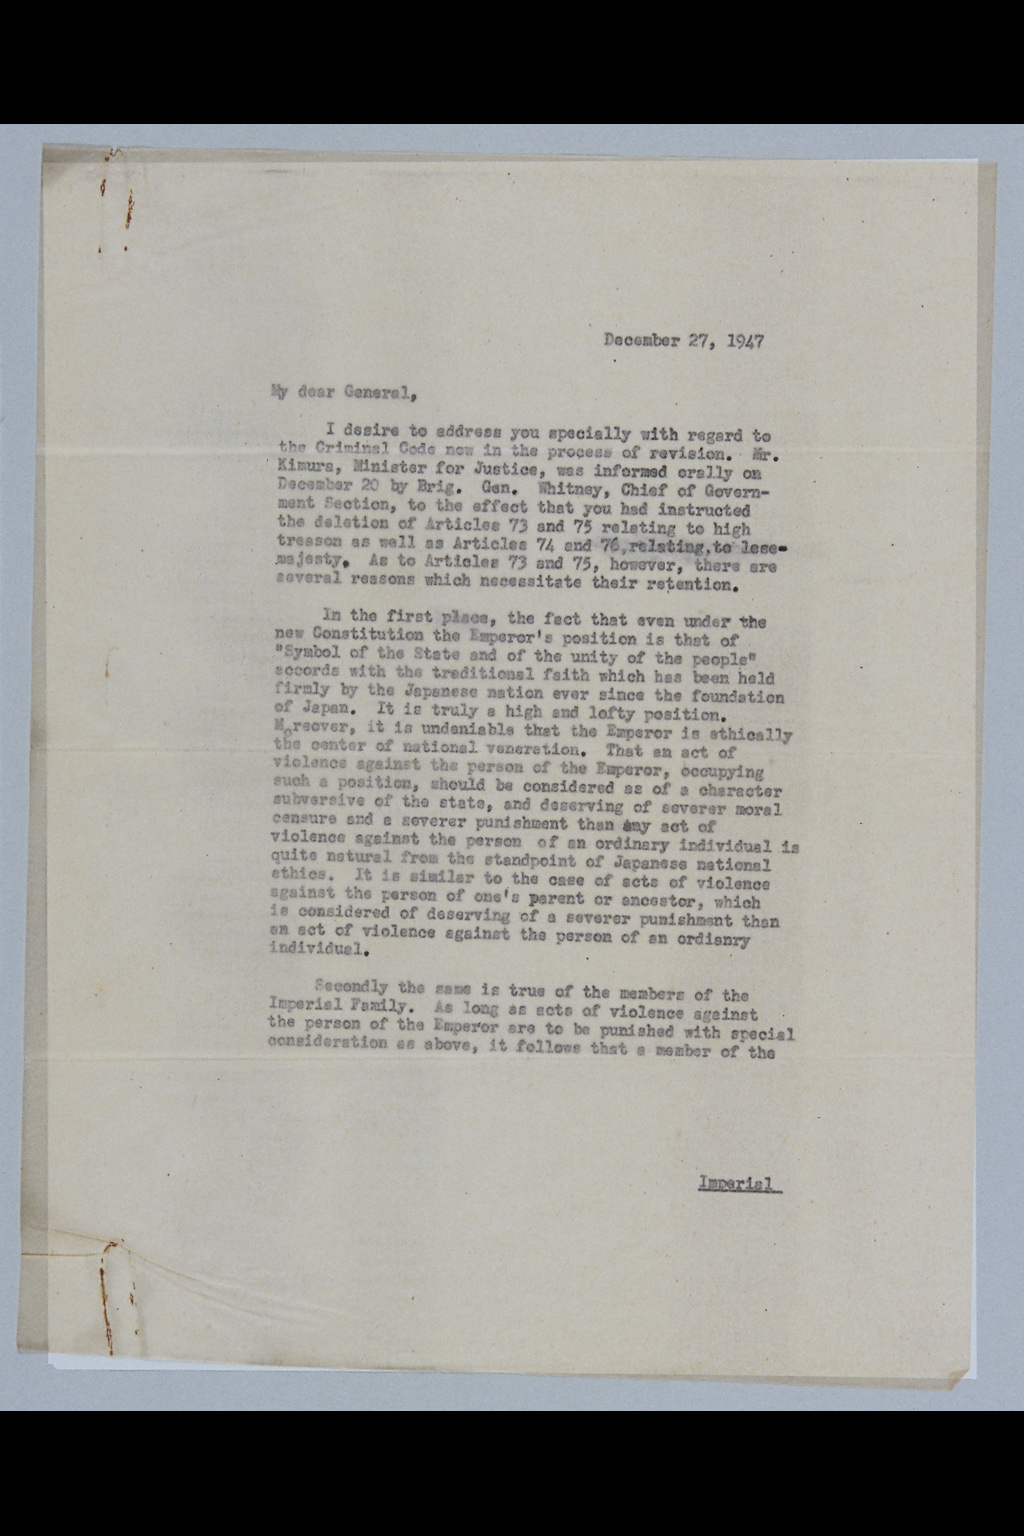 [Letter from Shigeru Yoshida to General MacArthur dated December 27, 1946](Larger image)